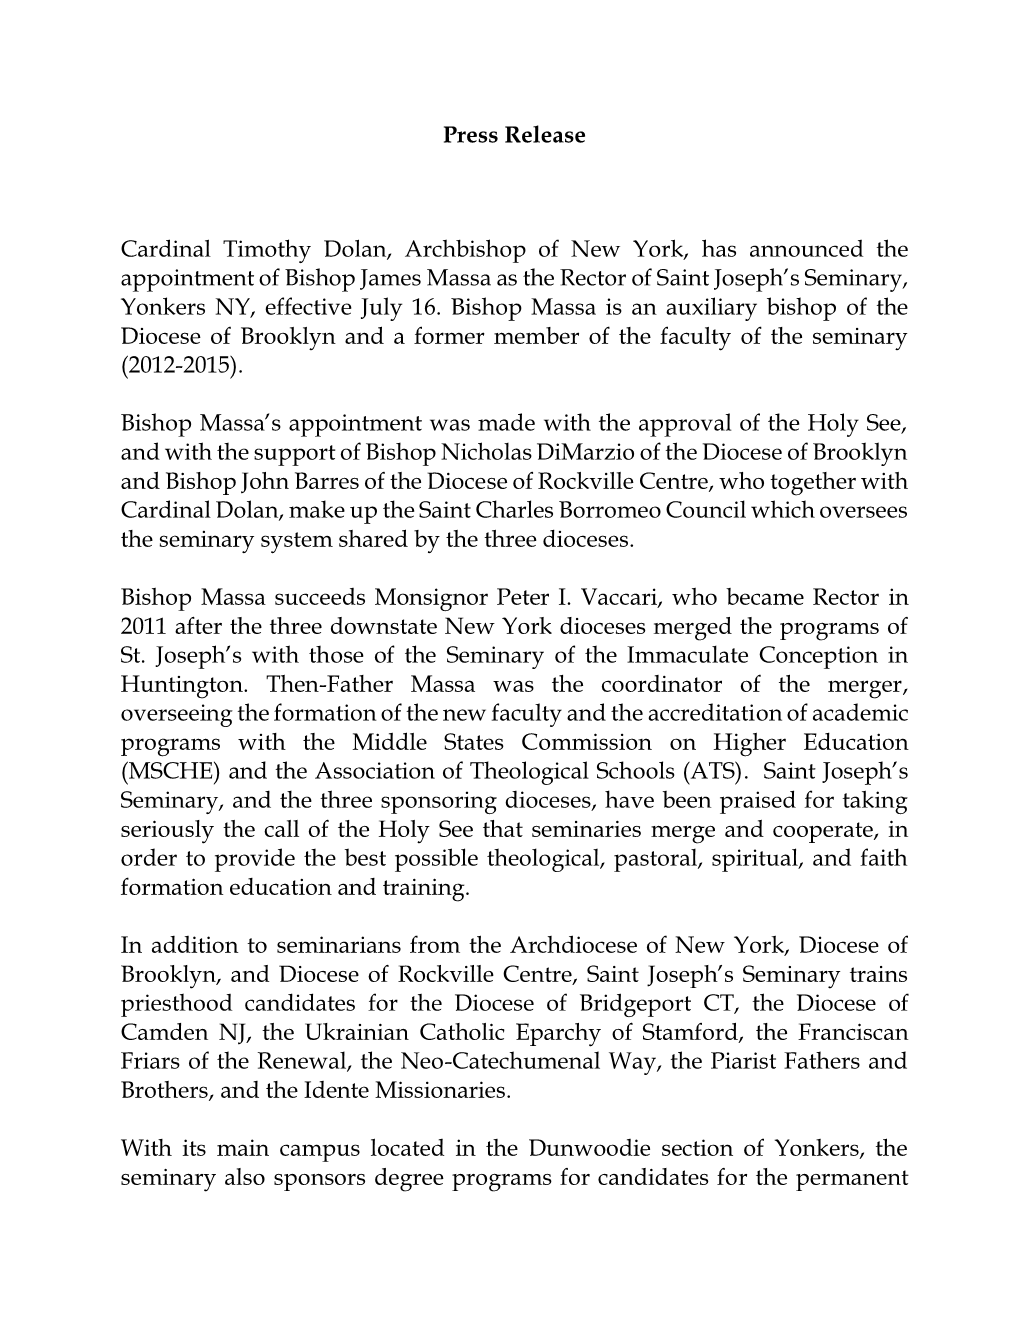 Press Release Cardinal Timothy Dolan, Archbishop of New York